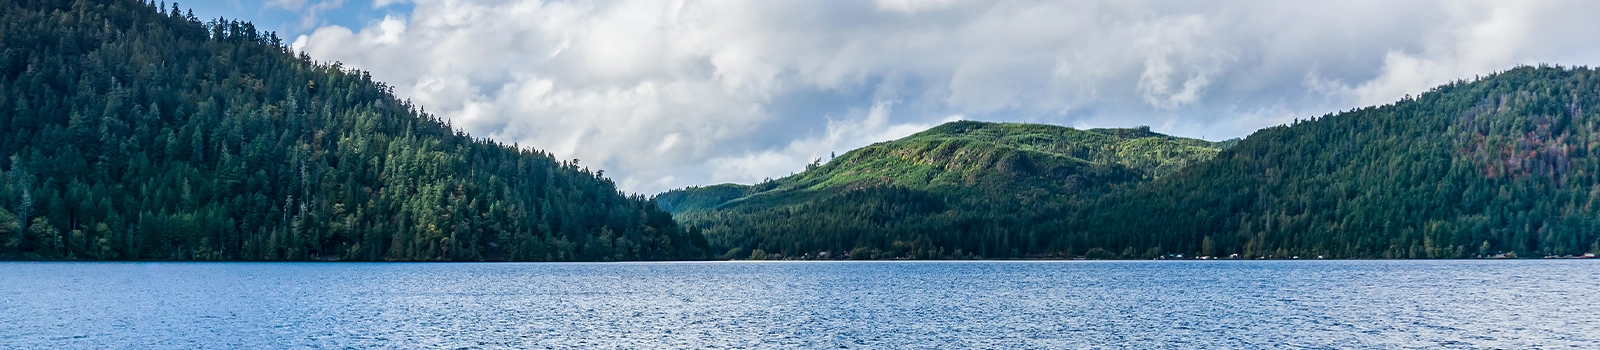 Landscape photo of Lake crescent in Washington State